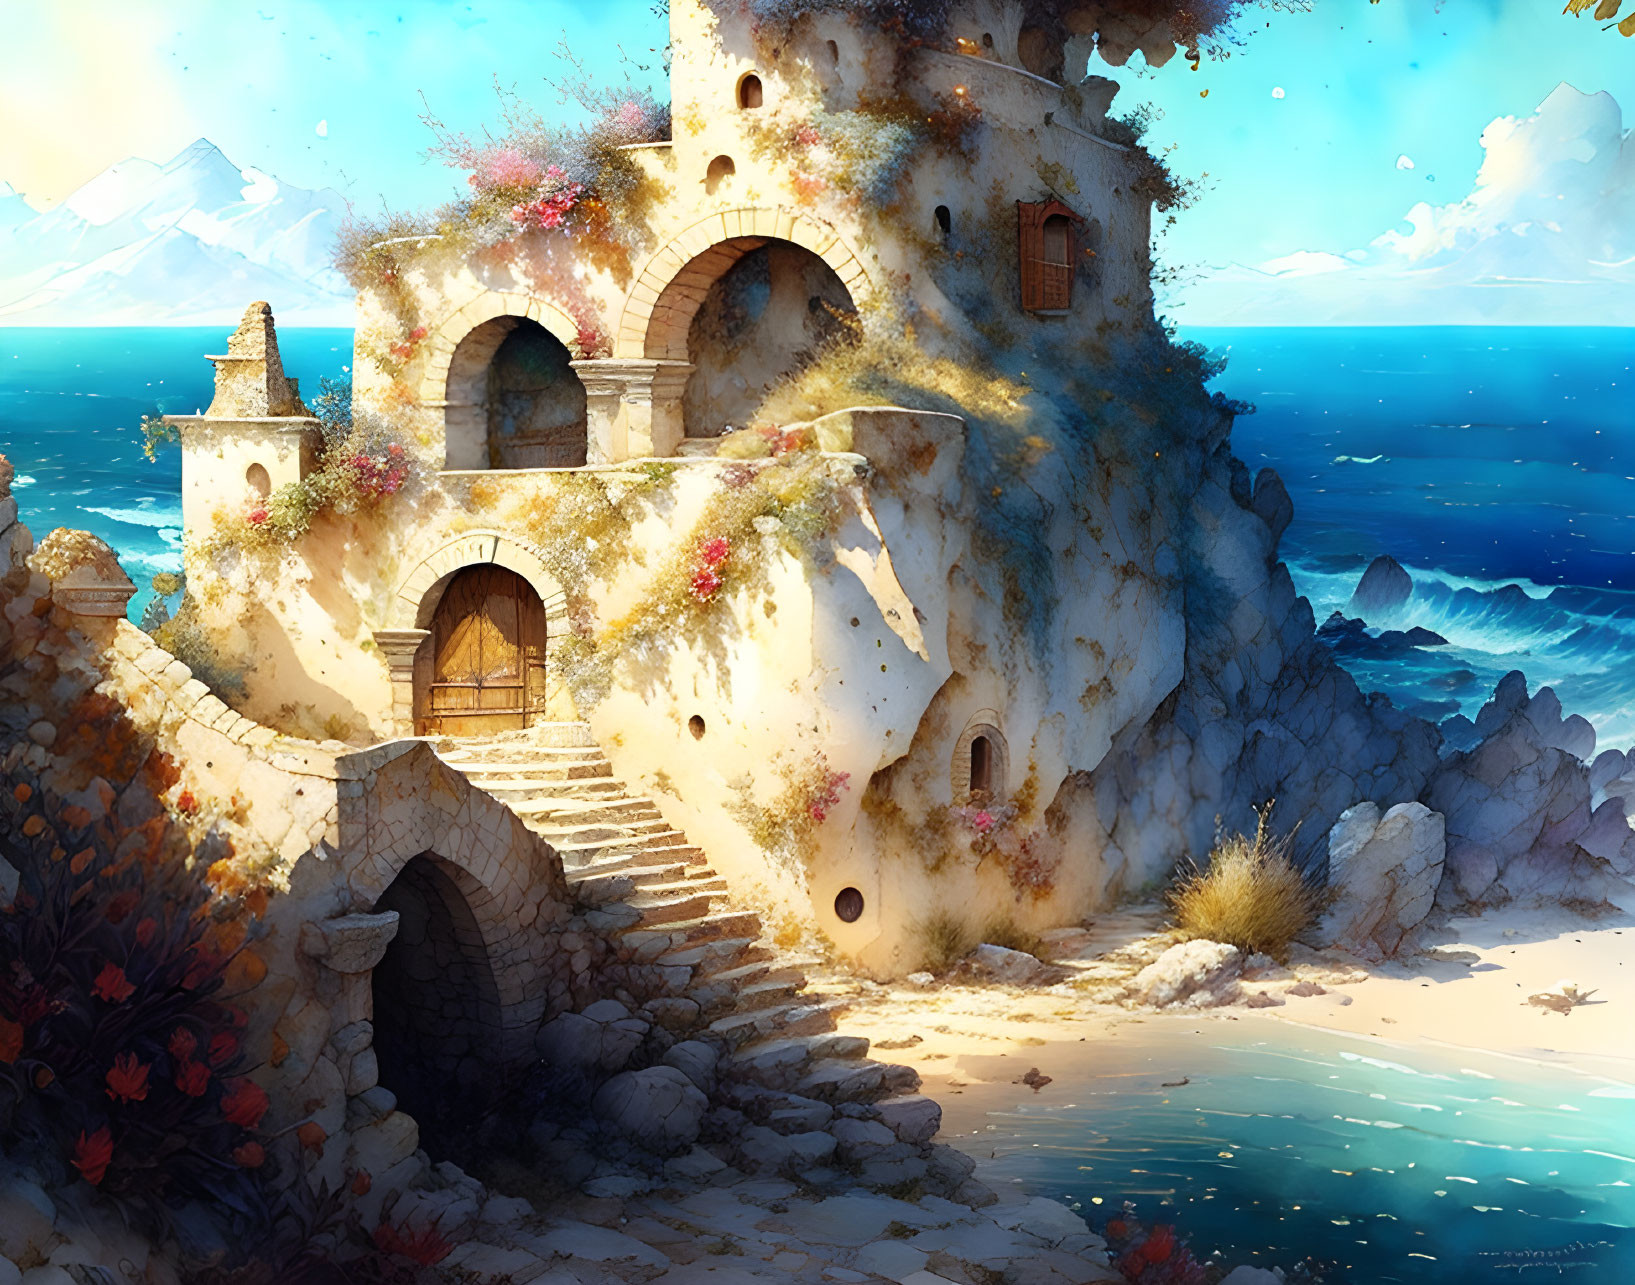 Sunlit coastal scene: White stone villa, colorful flowers, blue sea, distant mountains